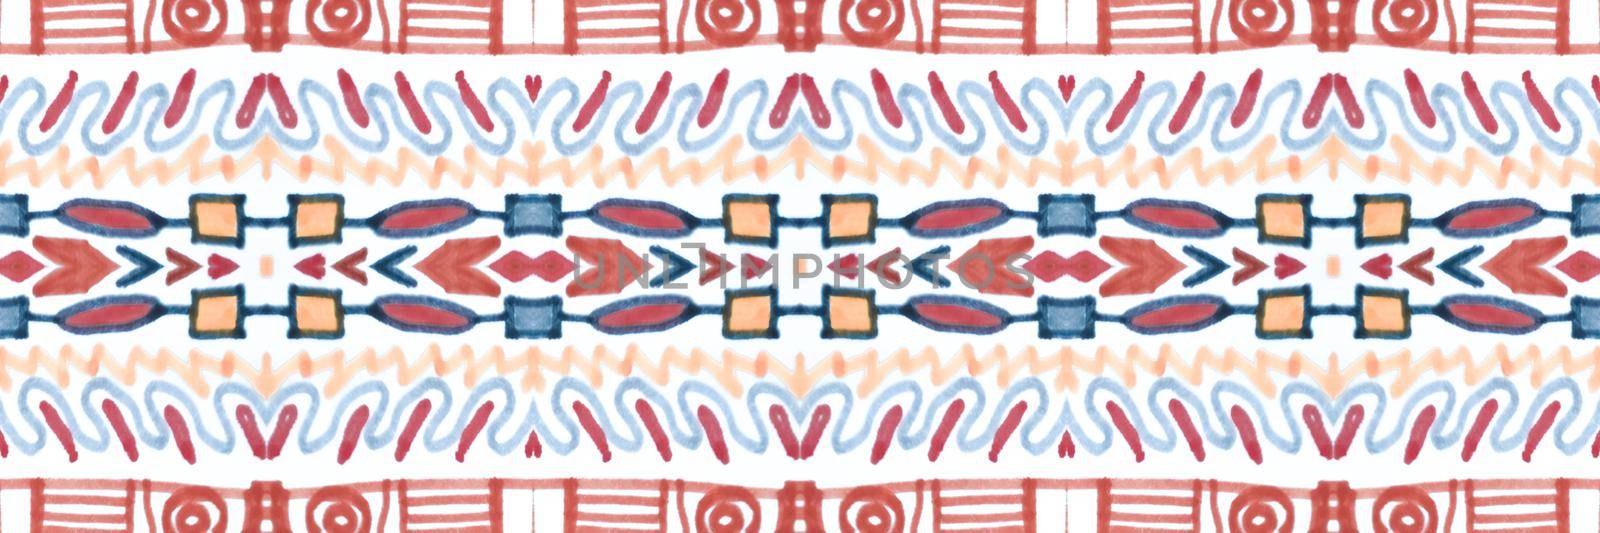 Seamless peruvian pattern. Abstract ethnic navajo illustration. Grunge peruvian background. Geometric tribal ornament. Mexico textile design. Traditional peruvian background design.